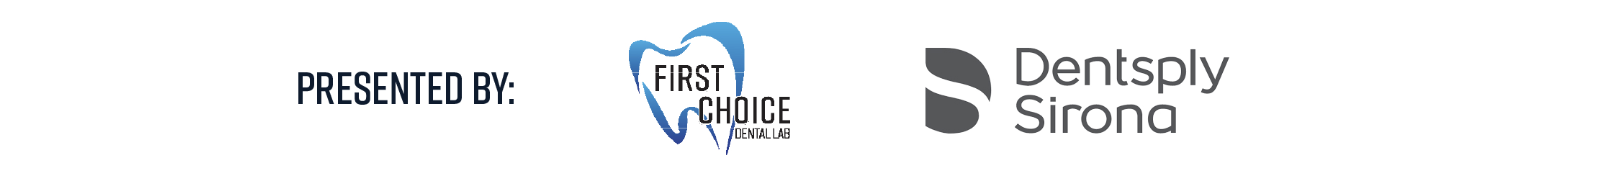 First Choice Dental Lab and Dentsply Sirona logos